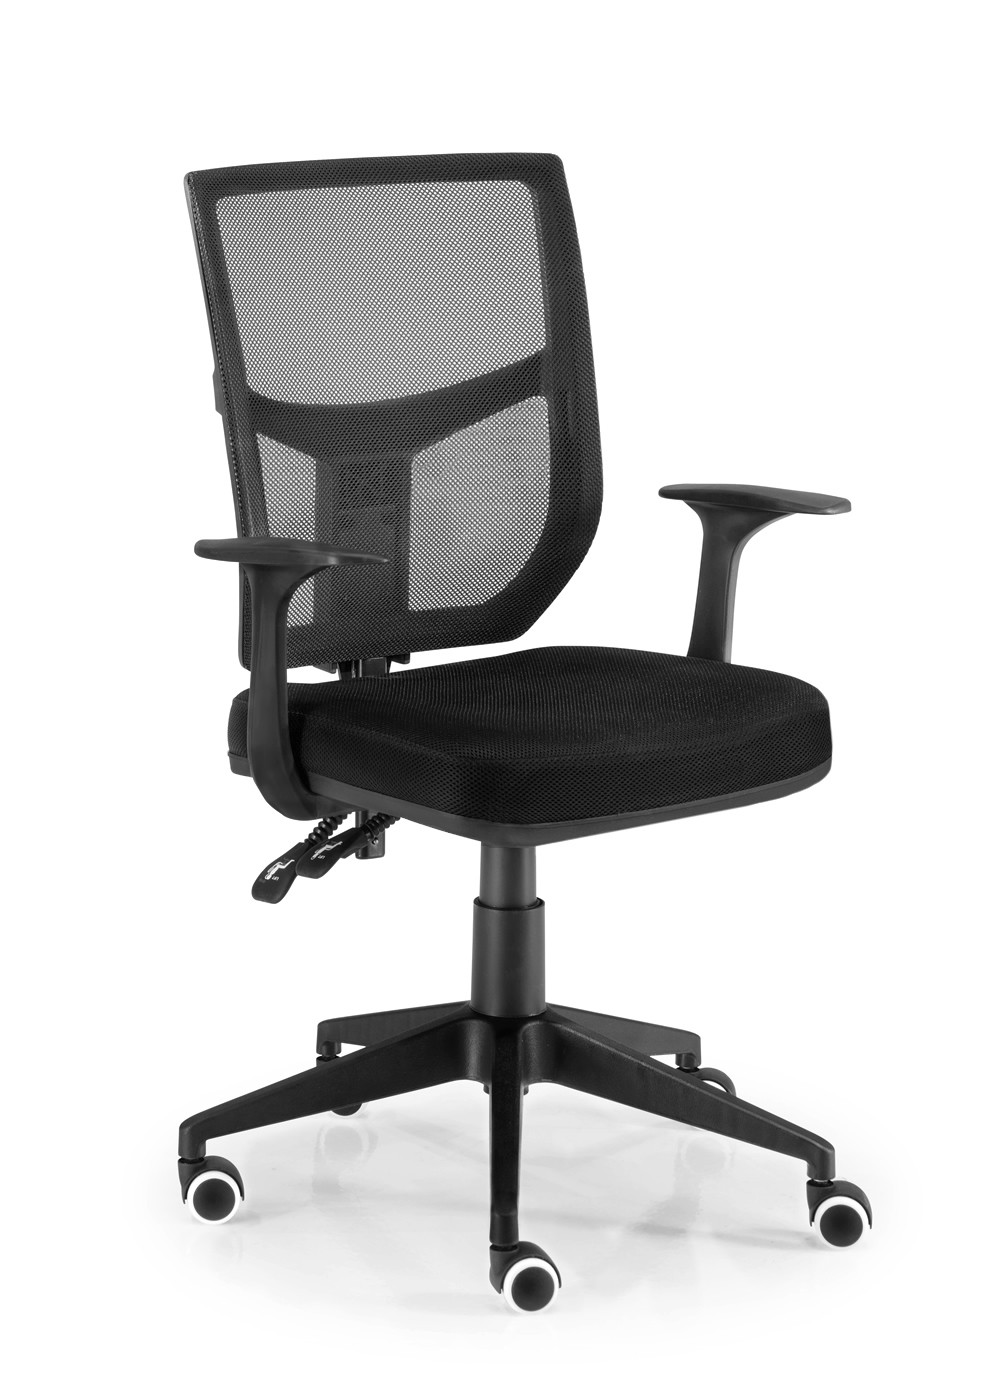 Silla de oficina acanalada con respaldo alto, silla de conferencia  ejecutiva de piel sintética, silla giratoria ajustable (negro)